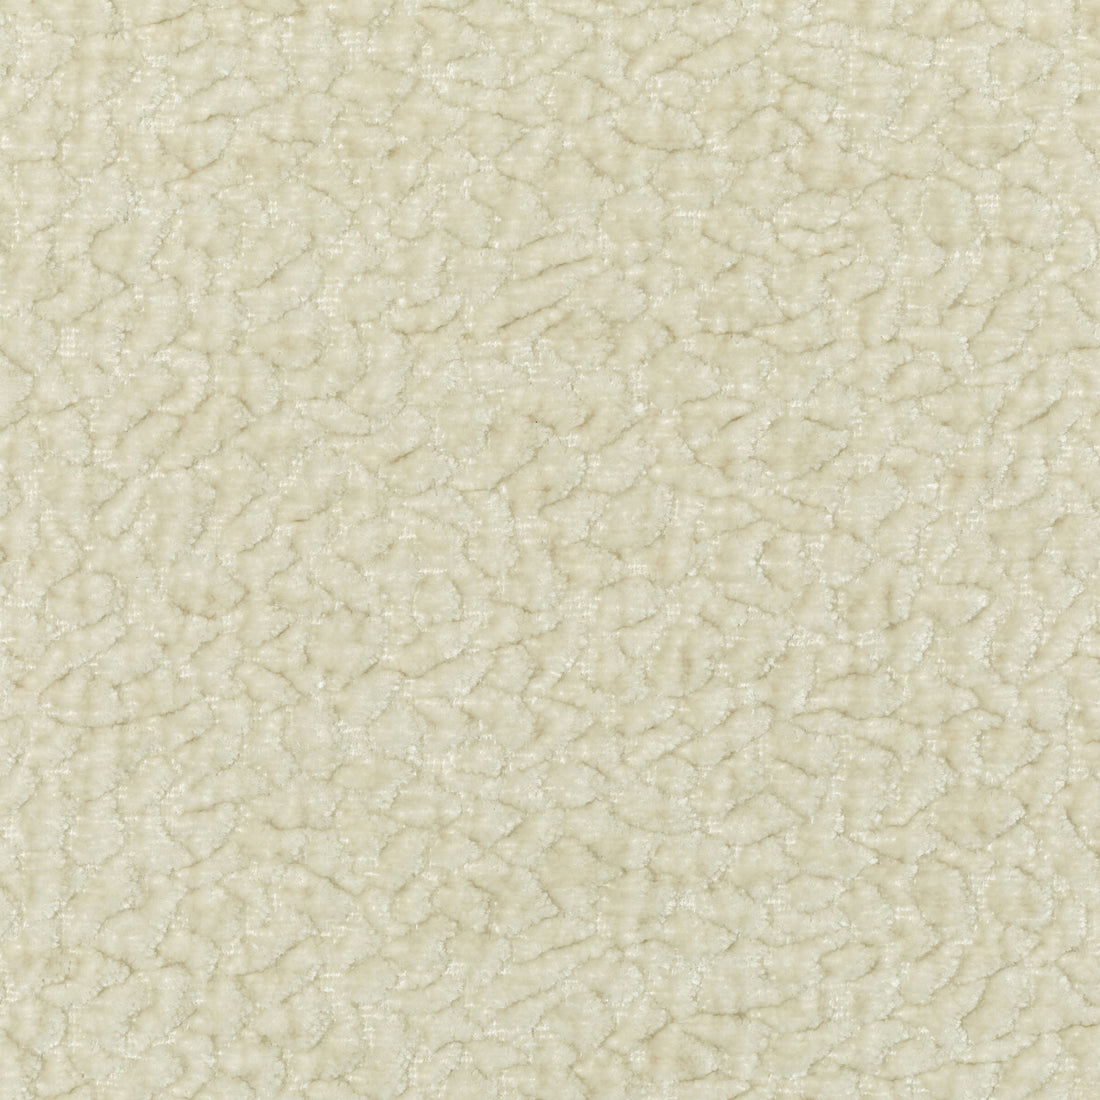 Barton Chenille fabric in latte color - pattern 36074.1111.0 - by Kravet Smart